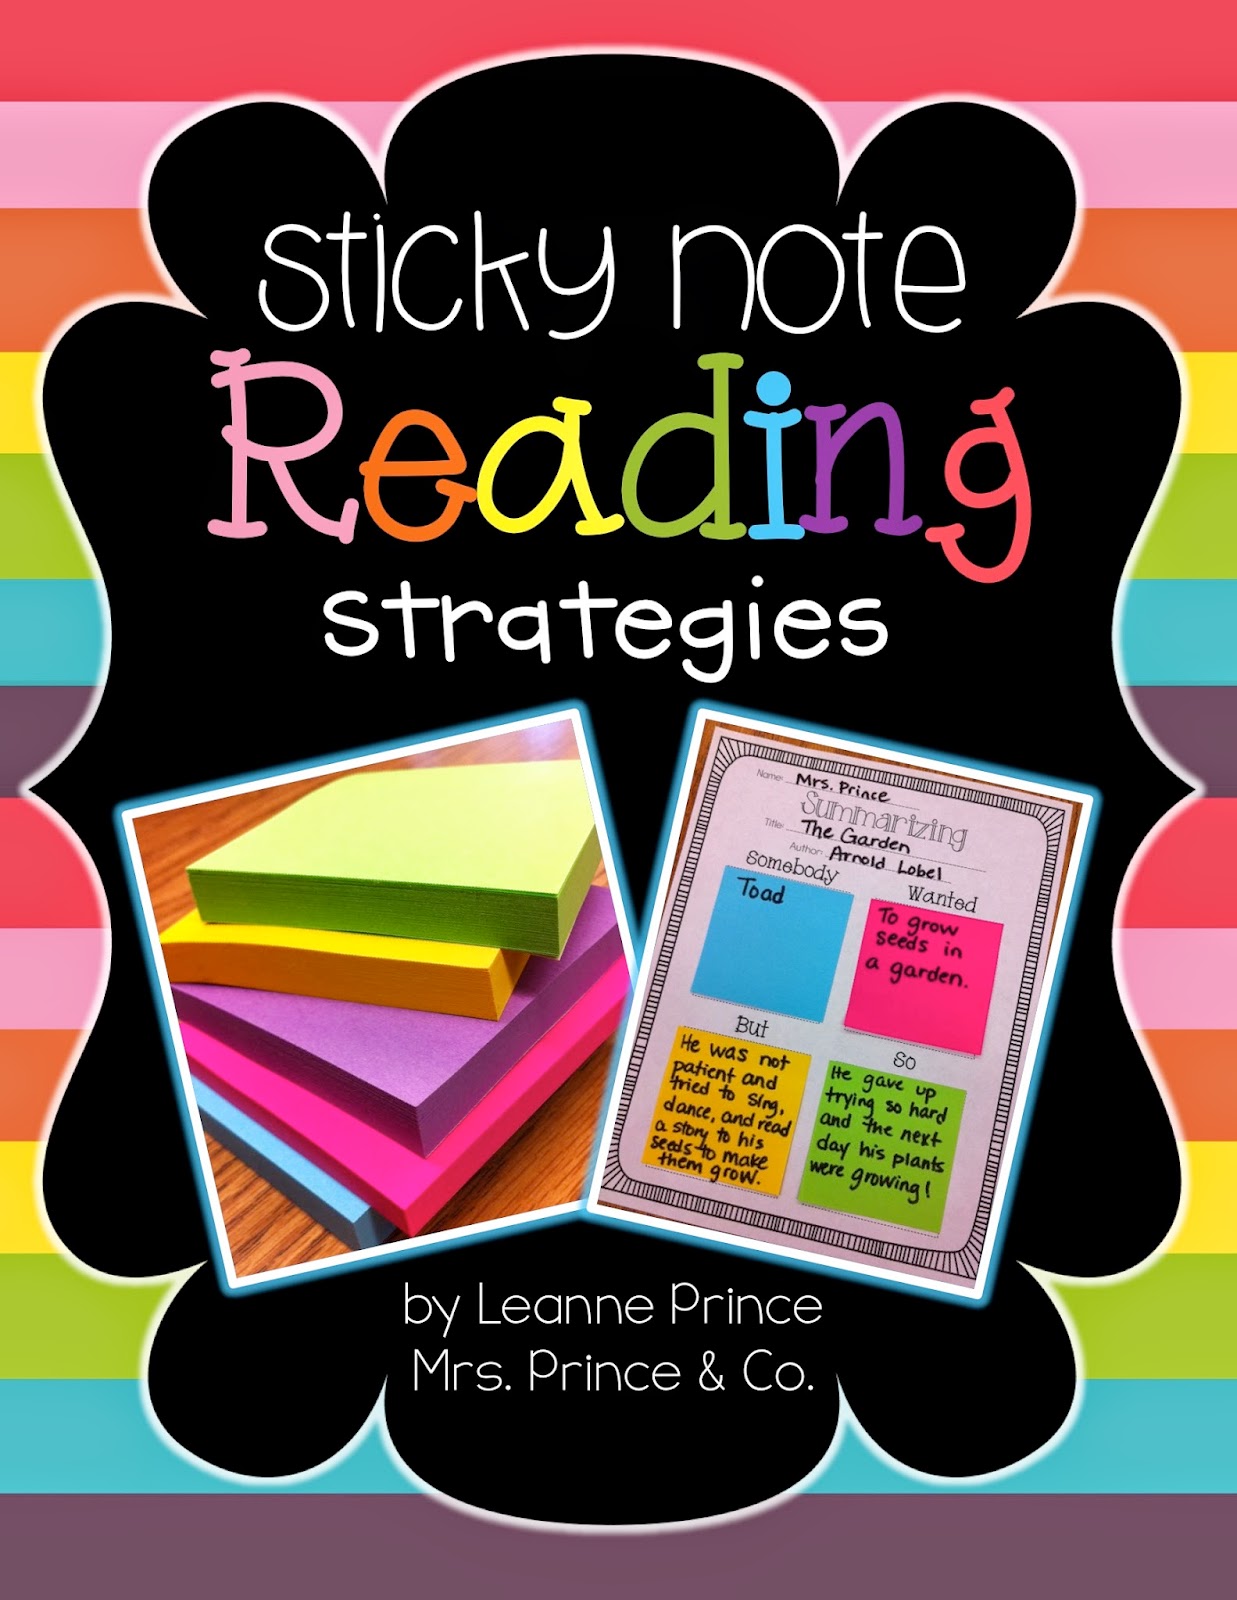 http://www.teacherspayteachers.com/Product/Sticky-Note-Reading-Strategies-660024